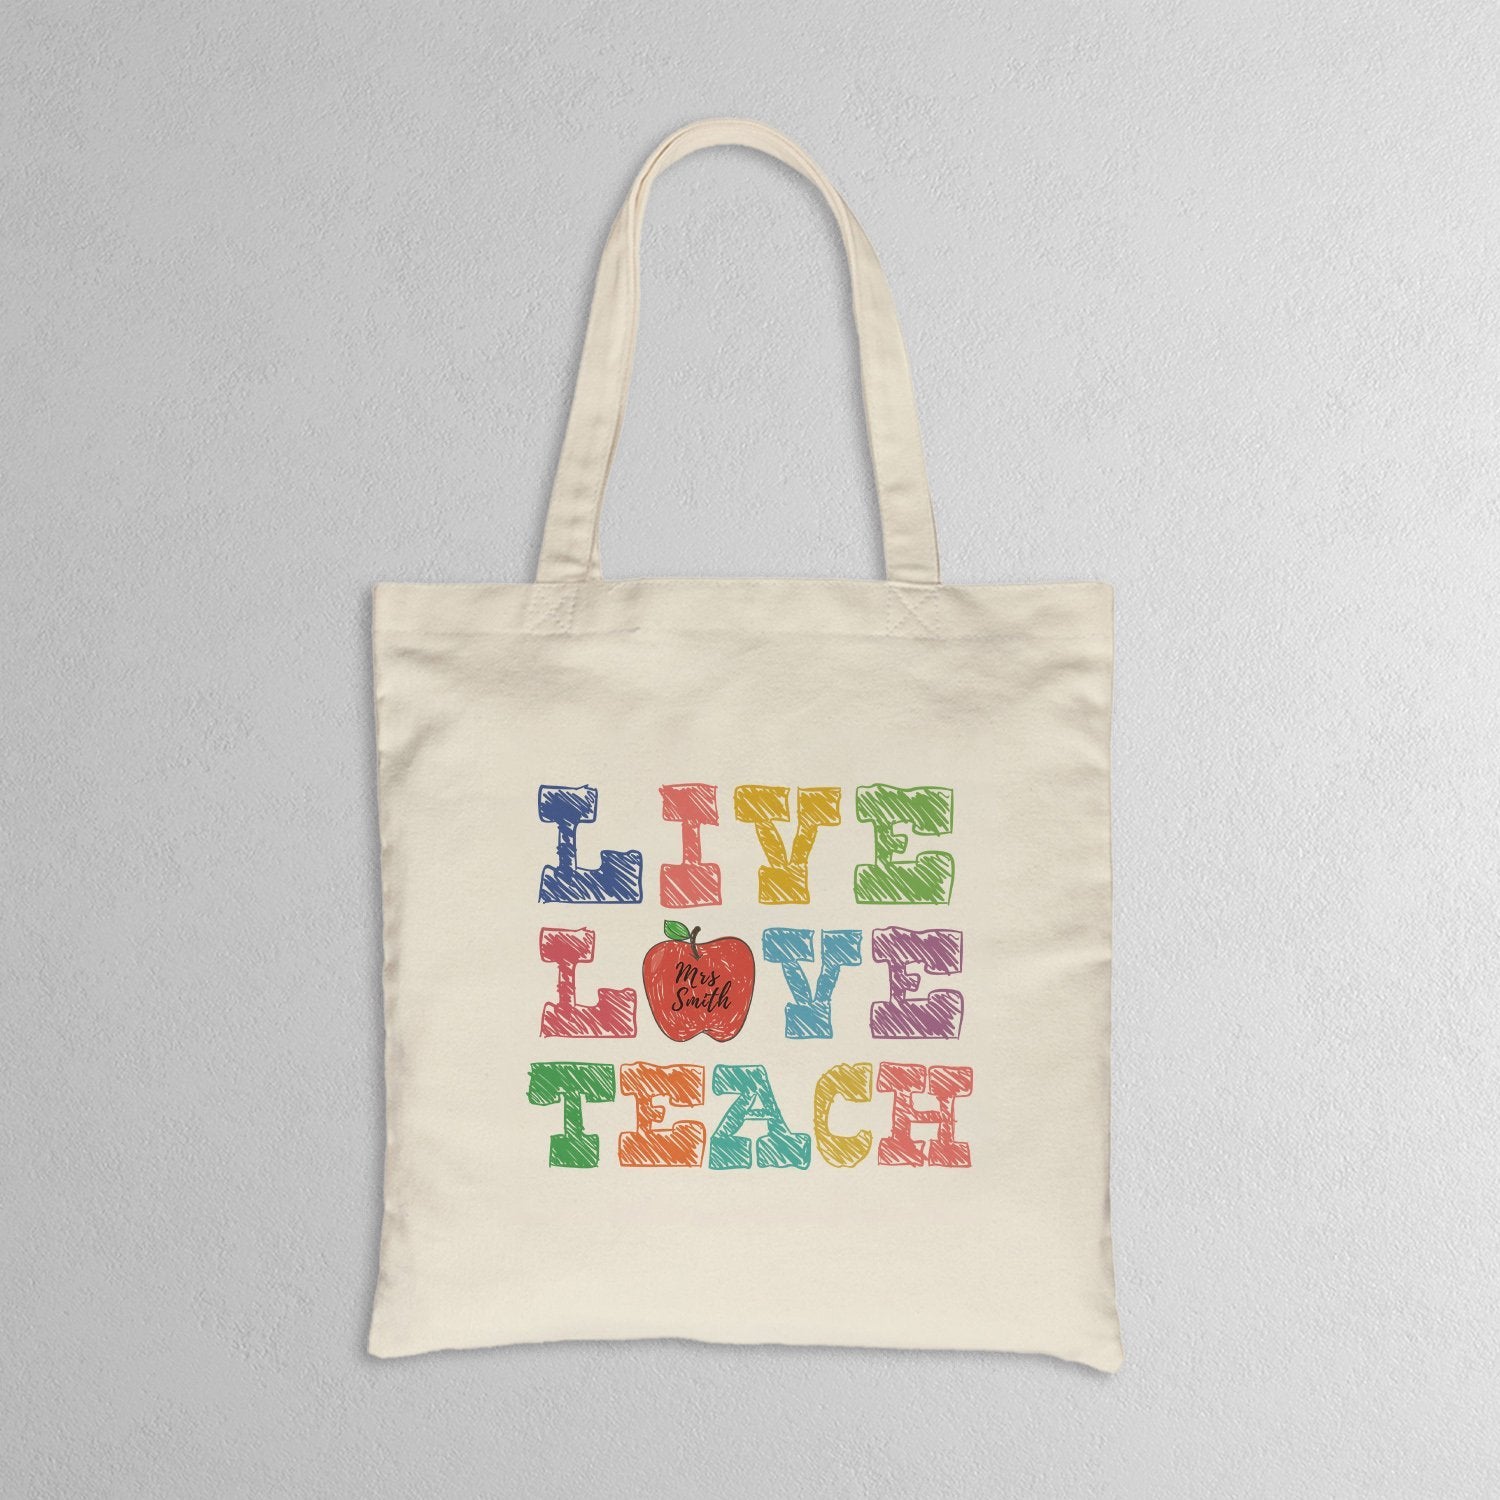 Live, Love, Teacher, Custom Tote Bag